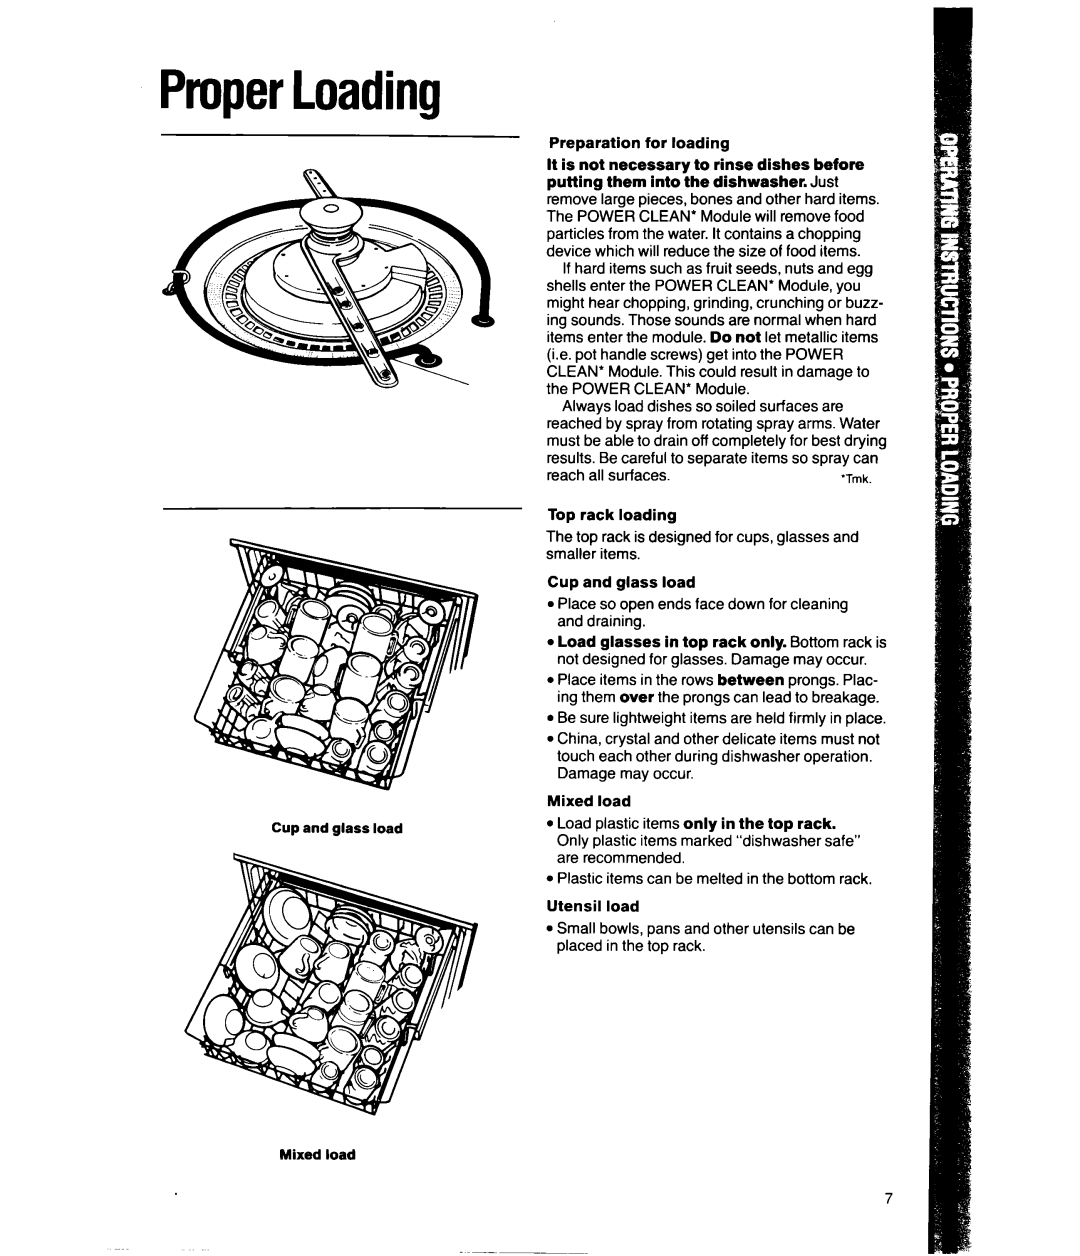 Whirlpool DU8550XT manual ProperLoading 